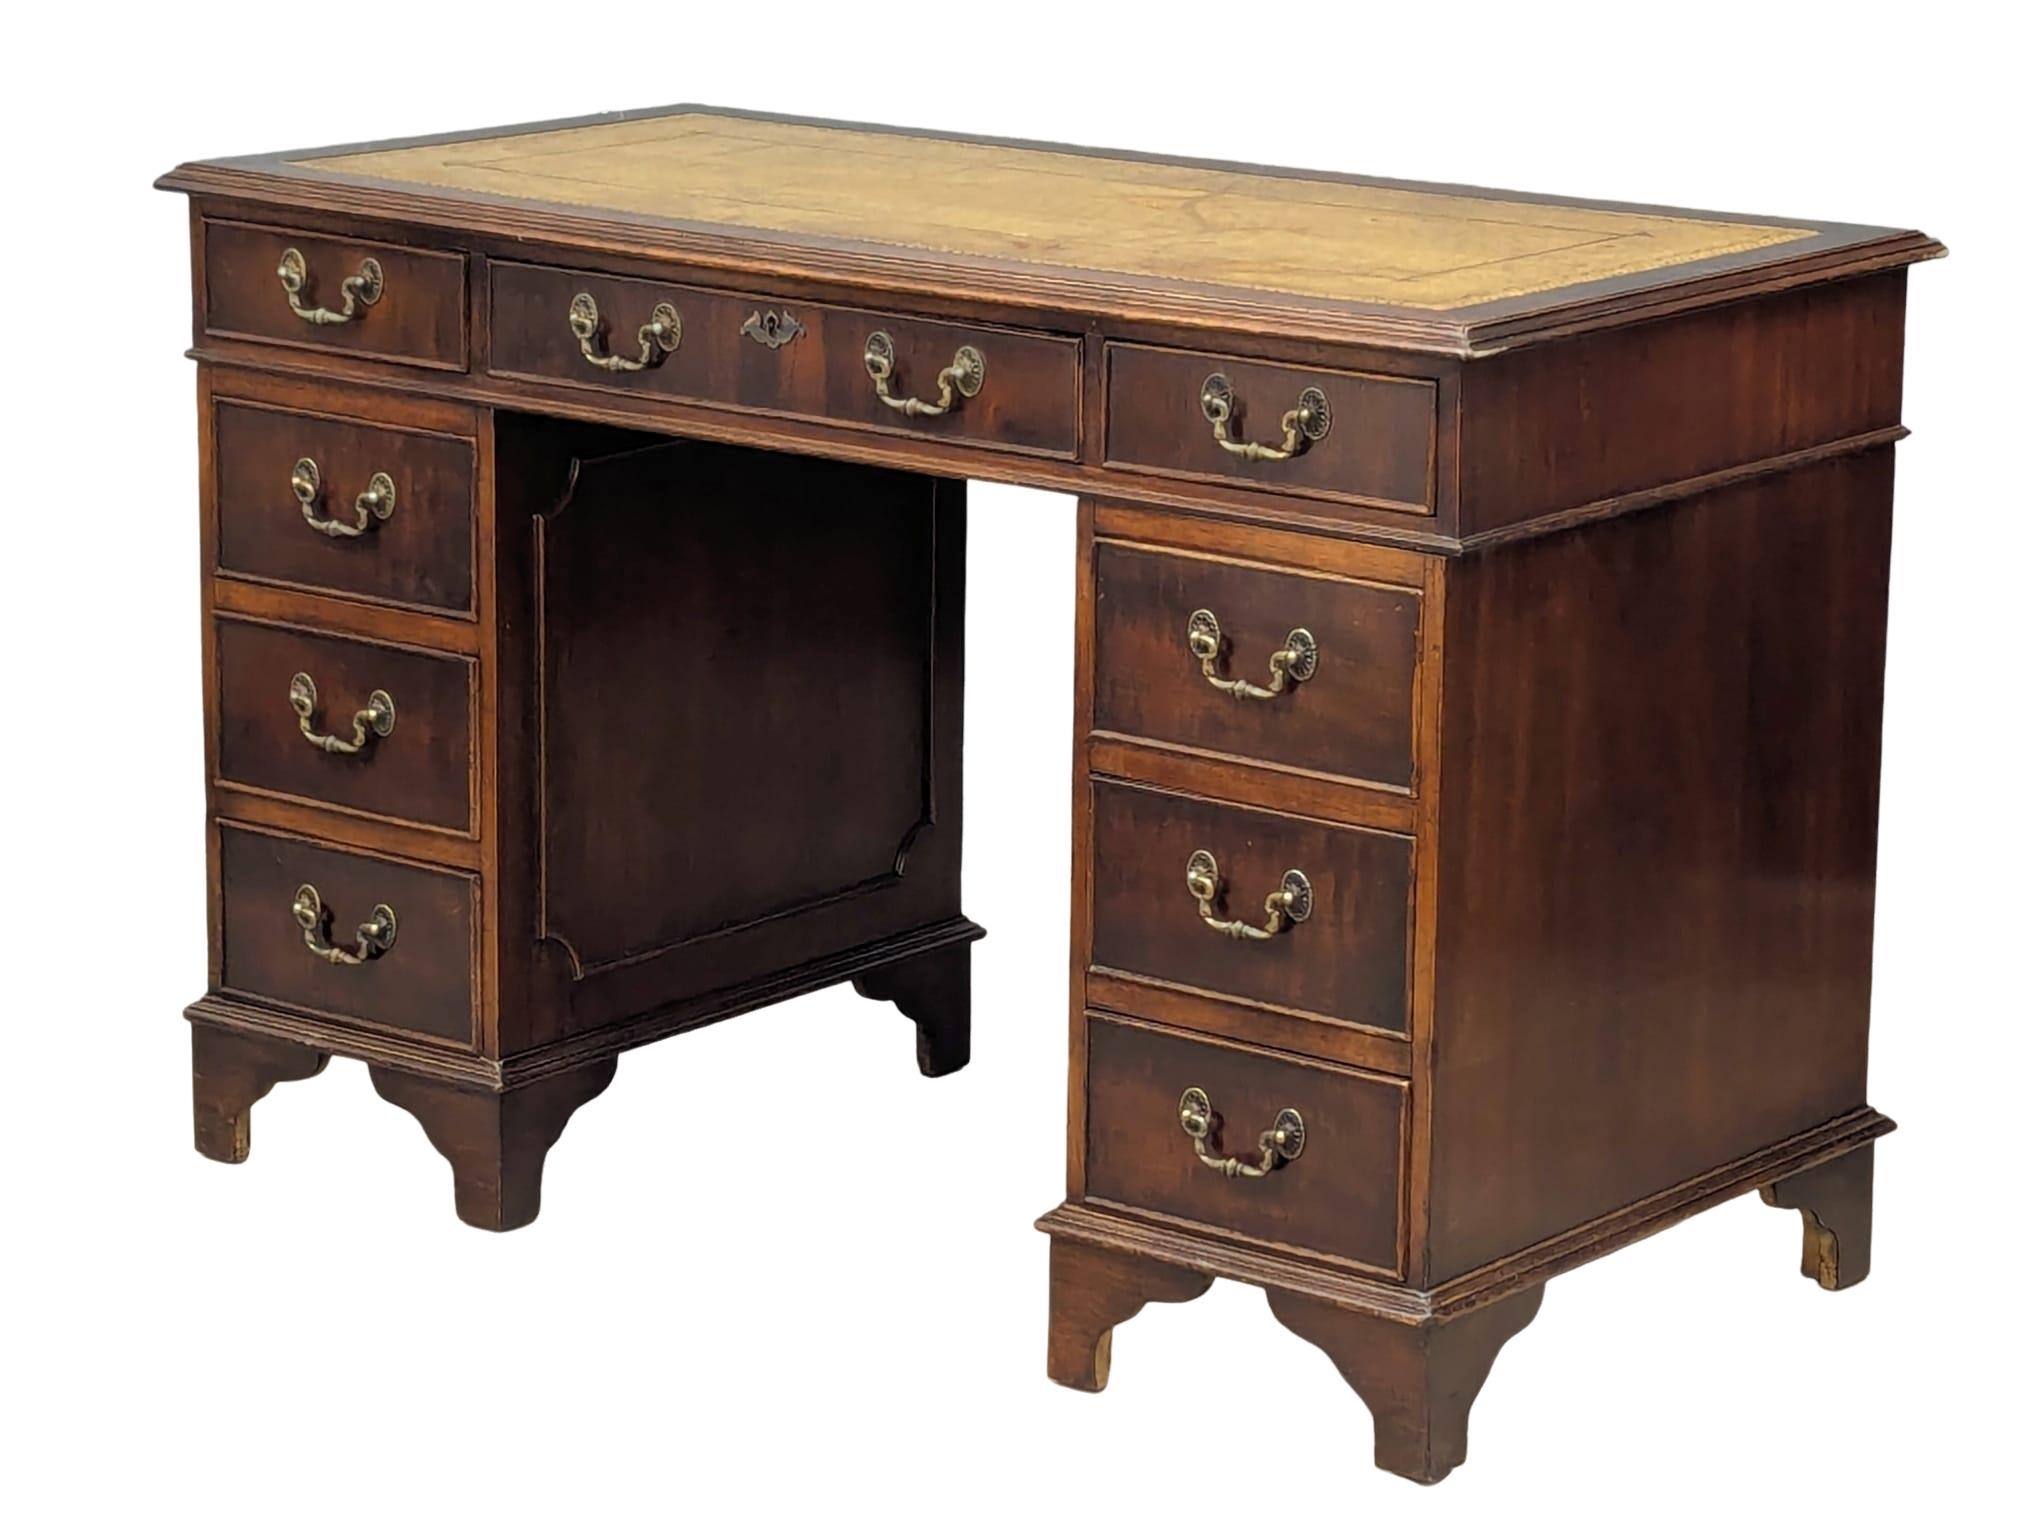 A George III style mahogany leather top desk, 118cm x 60cm x 77cm